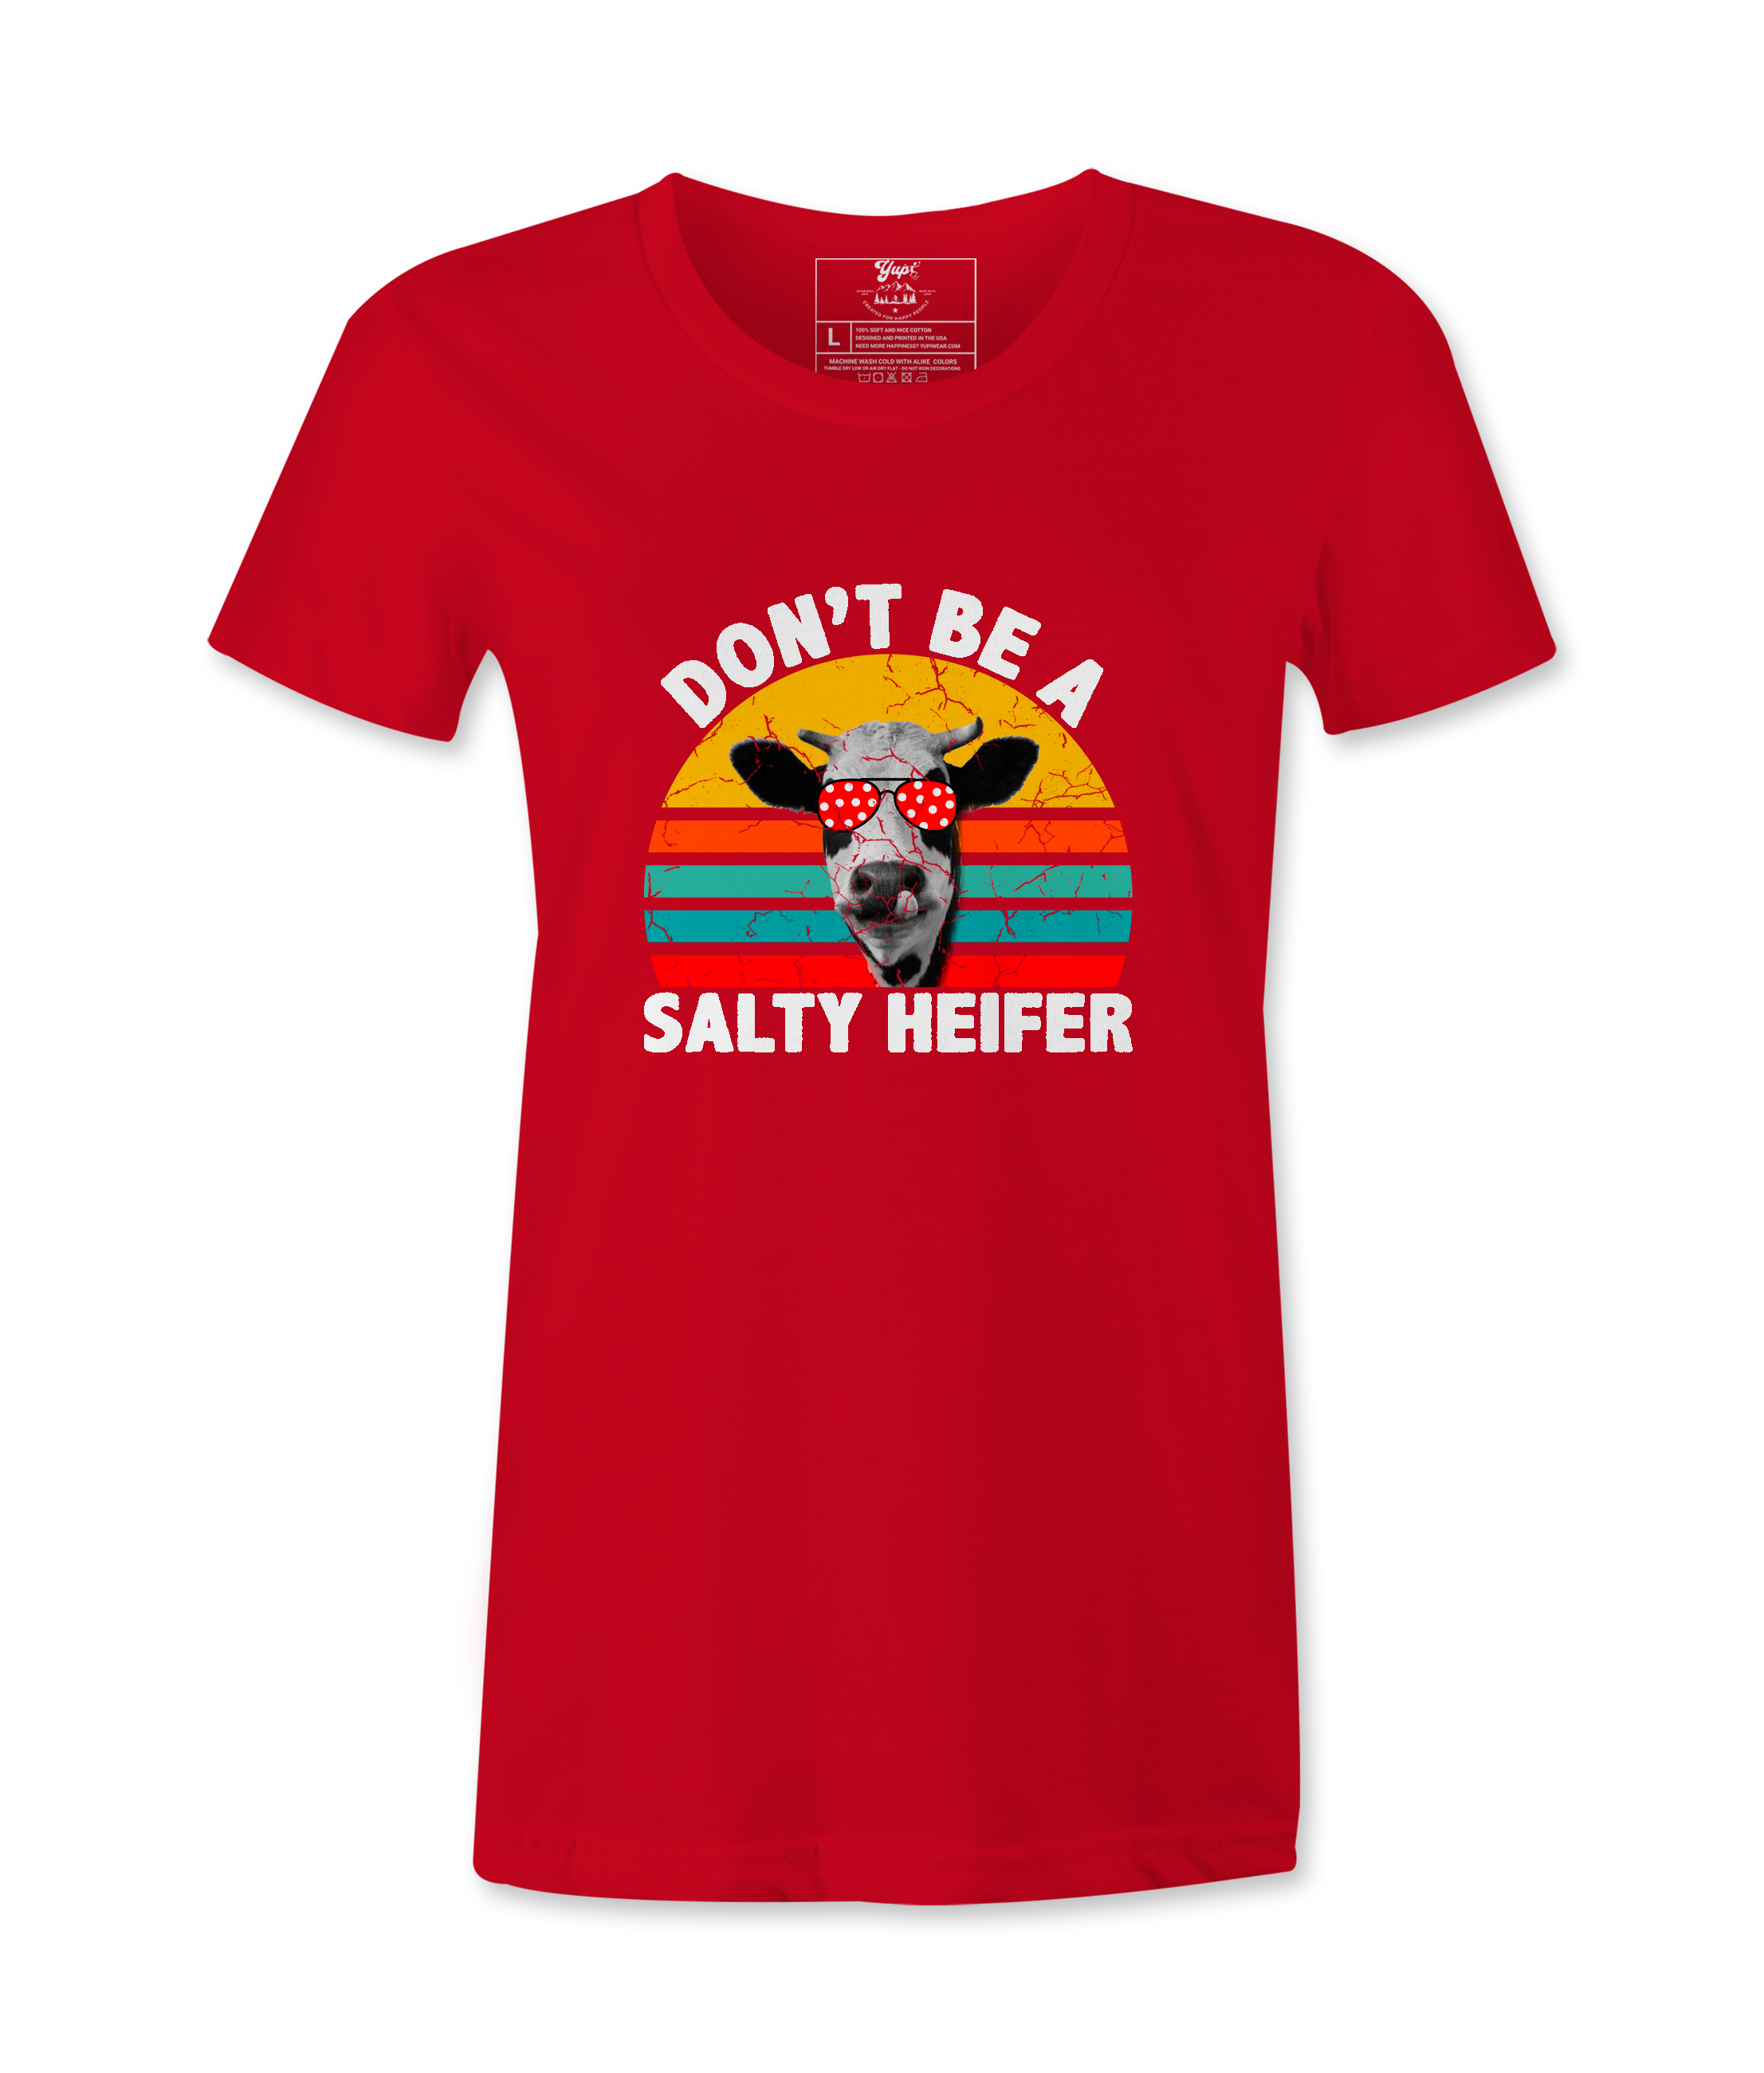 Don't Be A Salty Heifer - T-Shirt